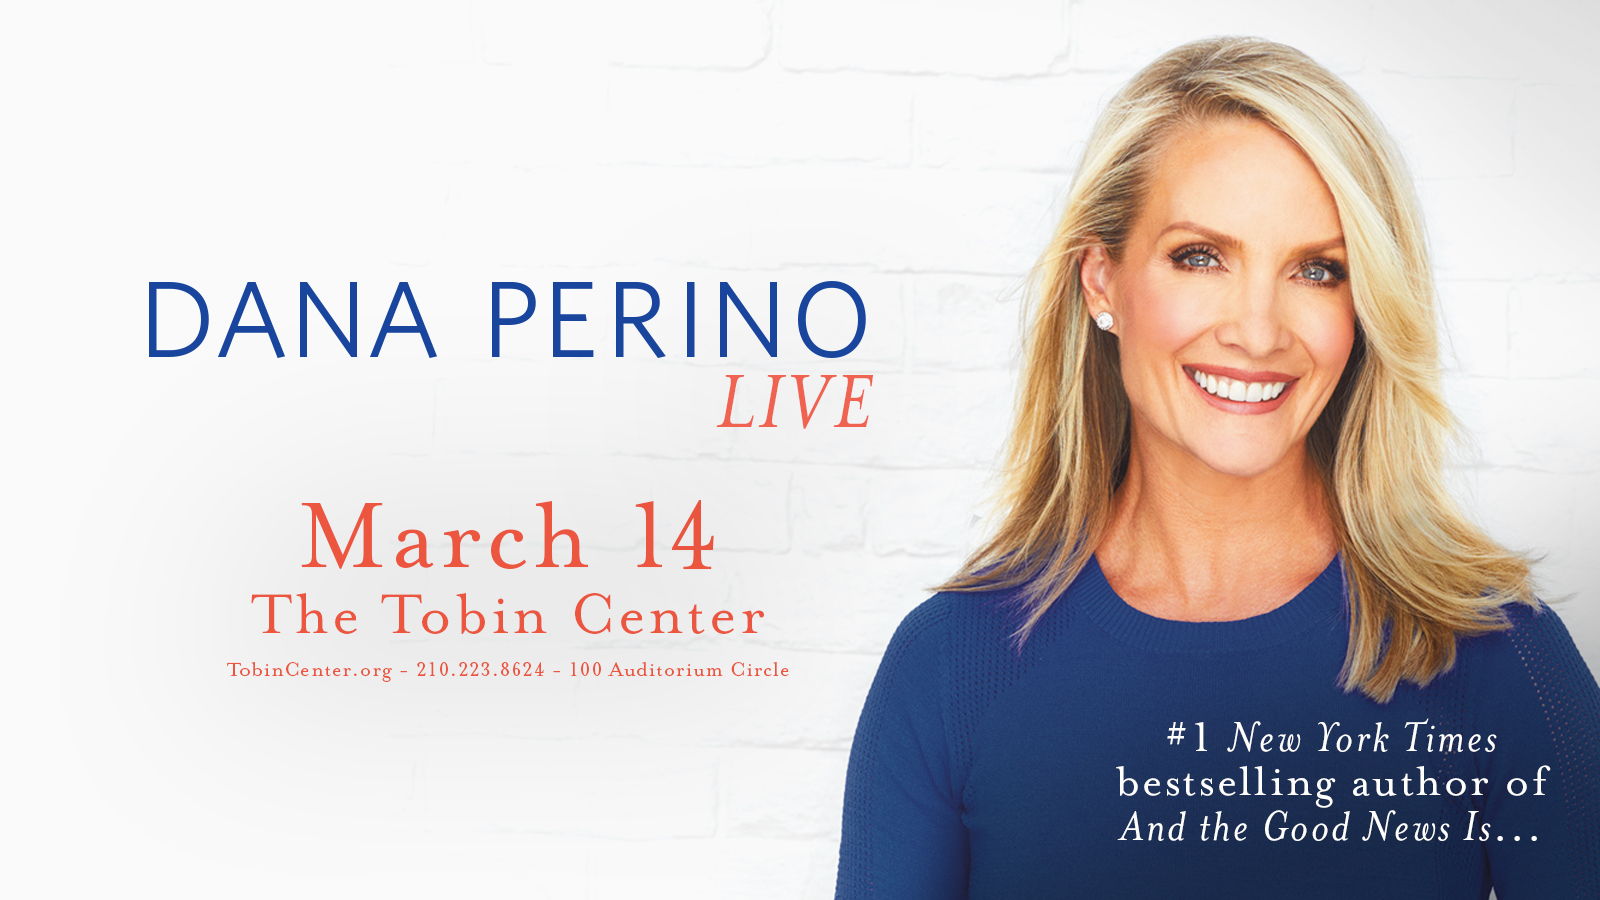 Dana Perino Live promotional image